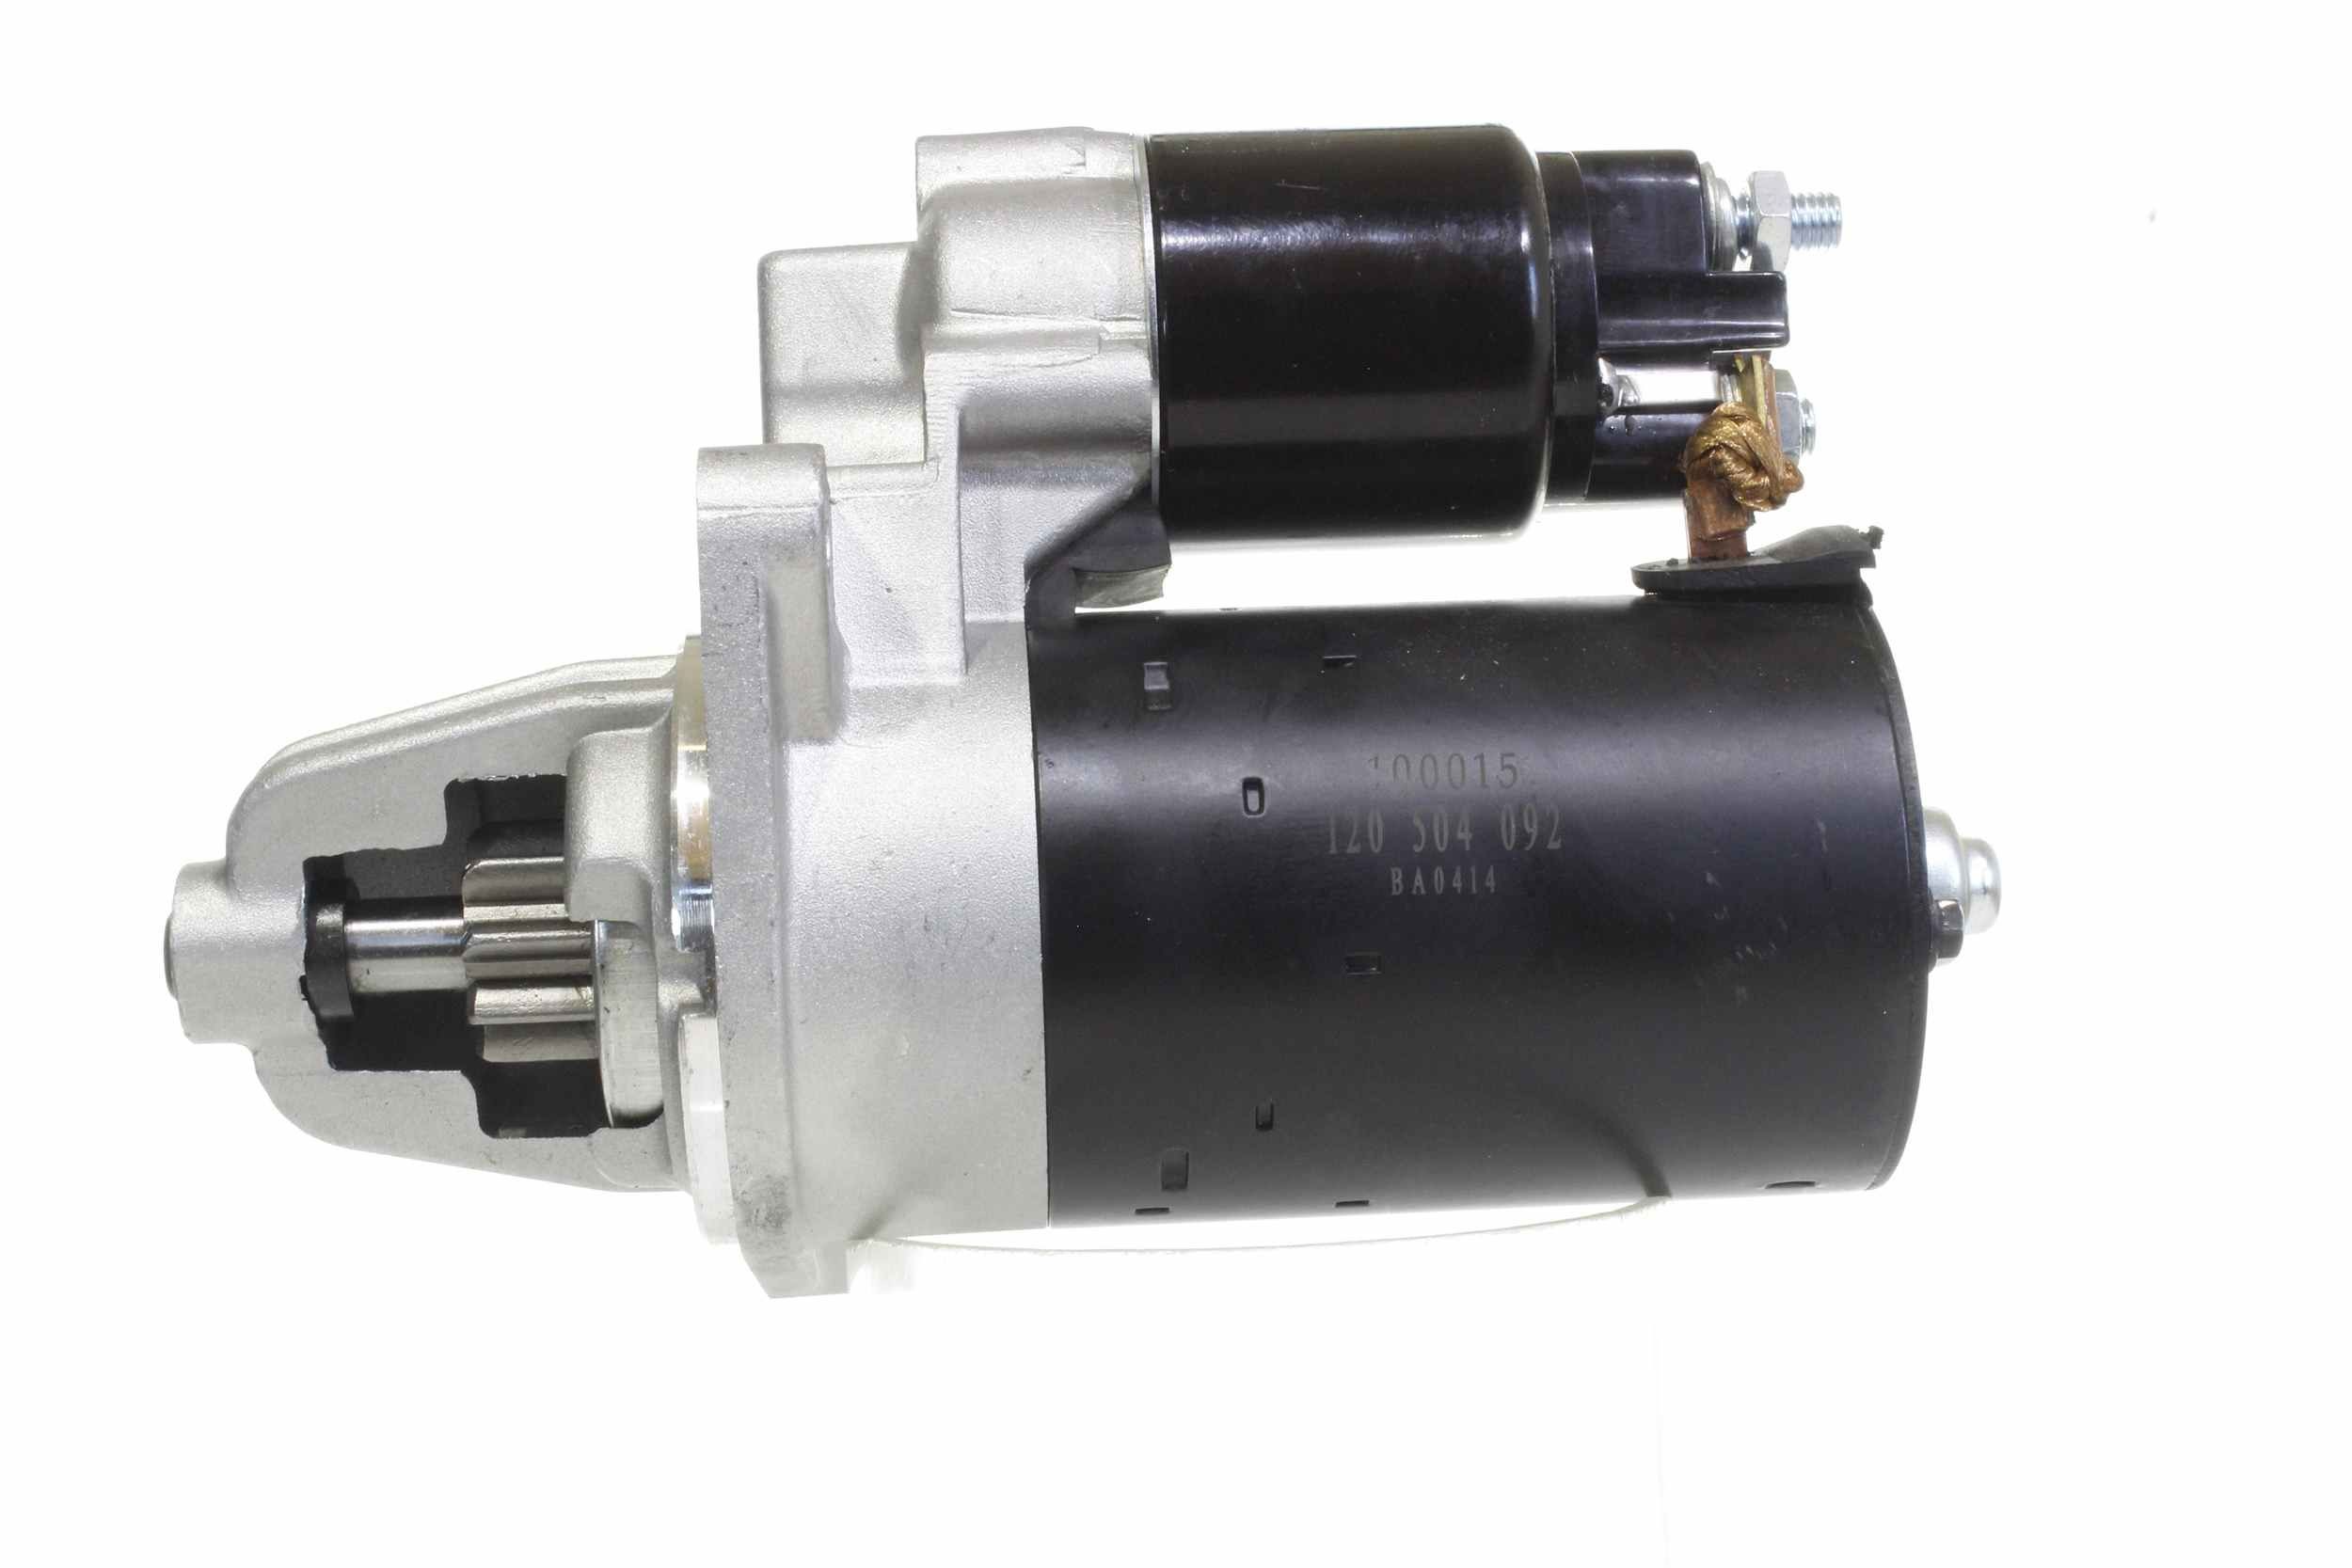 10441260 Engine starter motor ALANKO STR70243 review and test